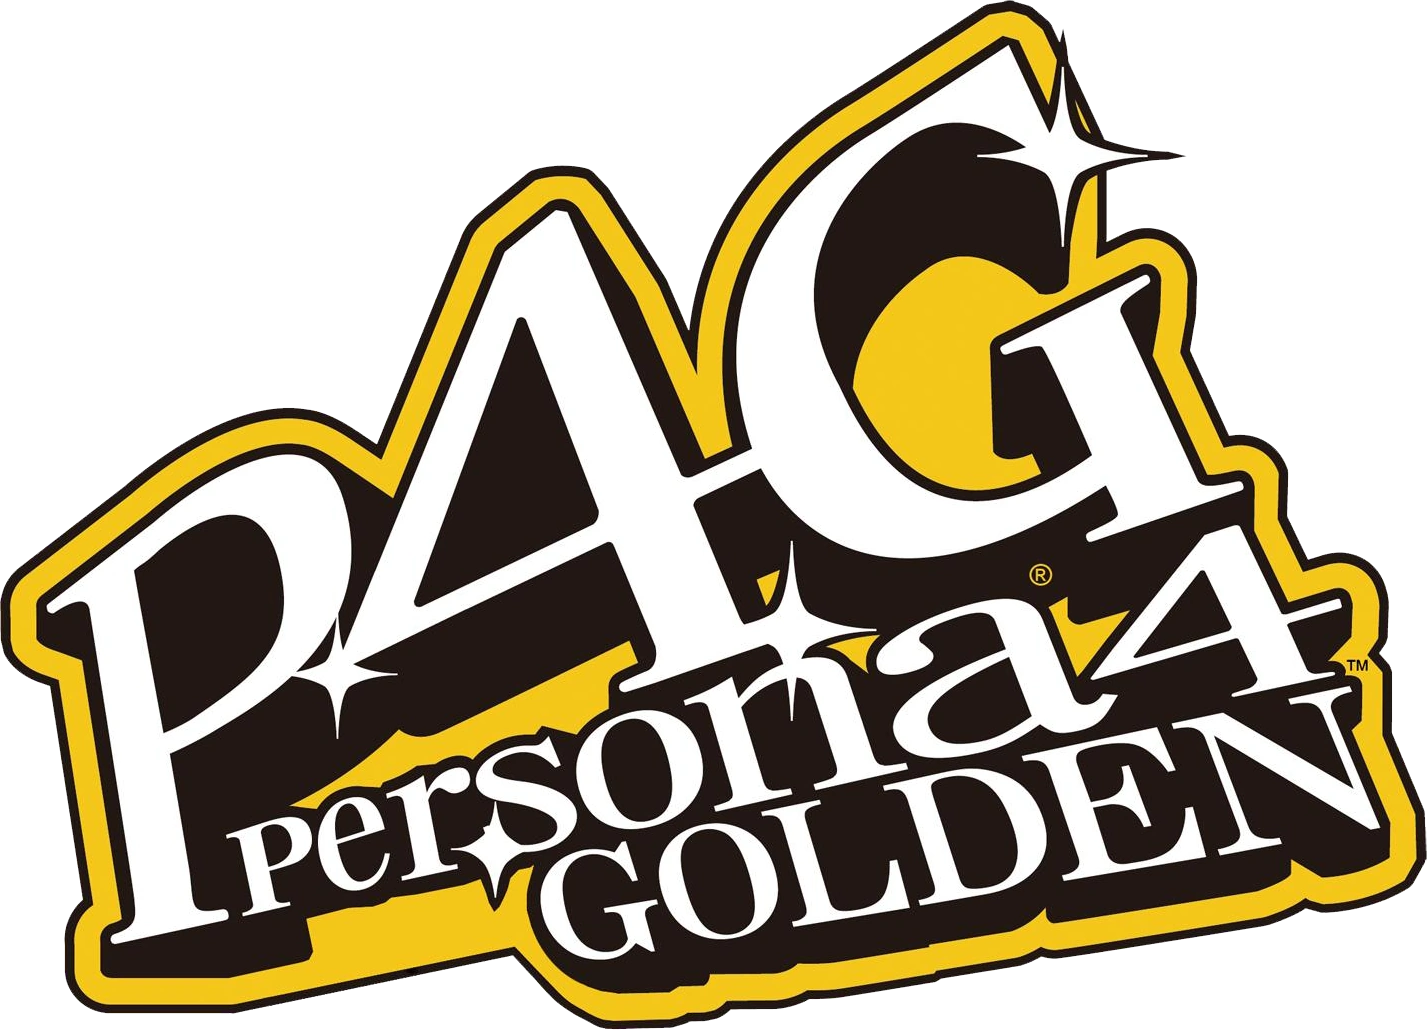 persona 4 golden logo